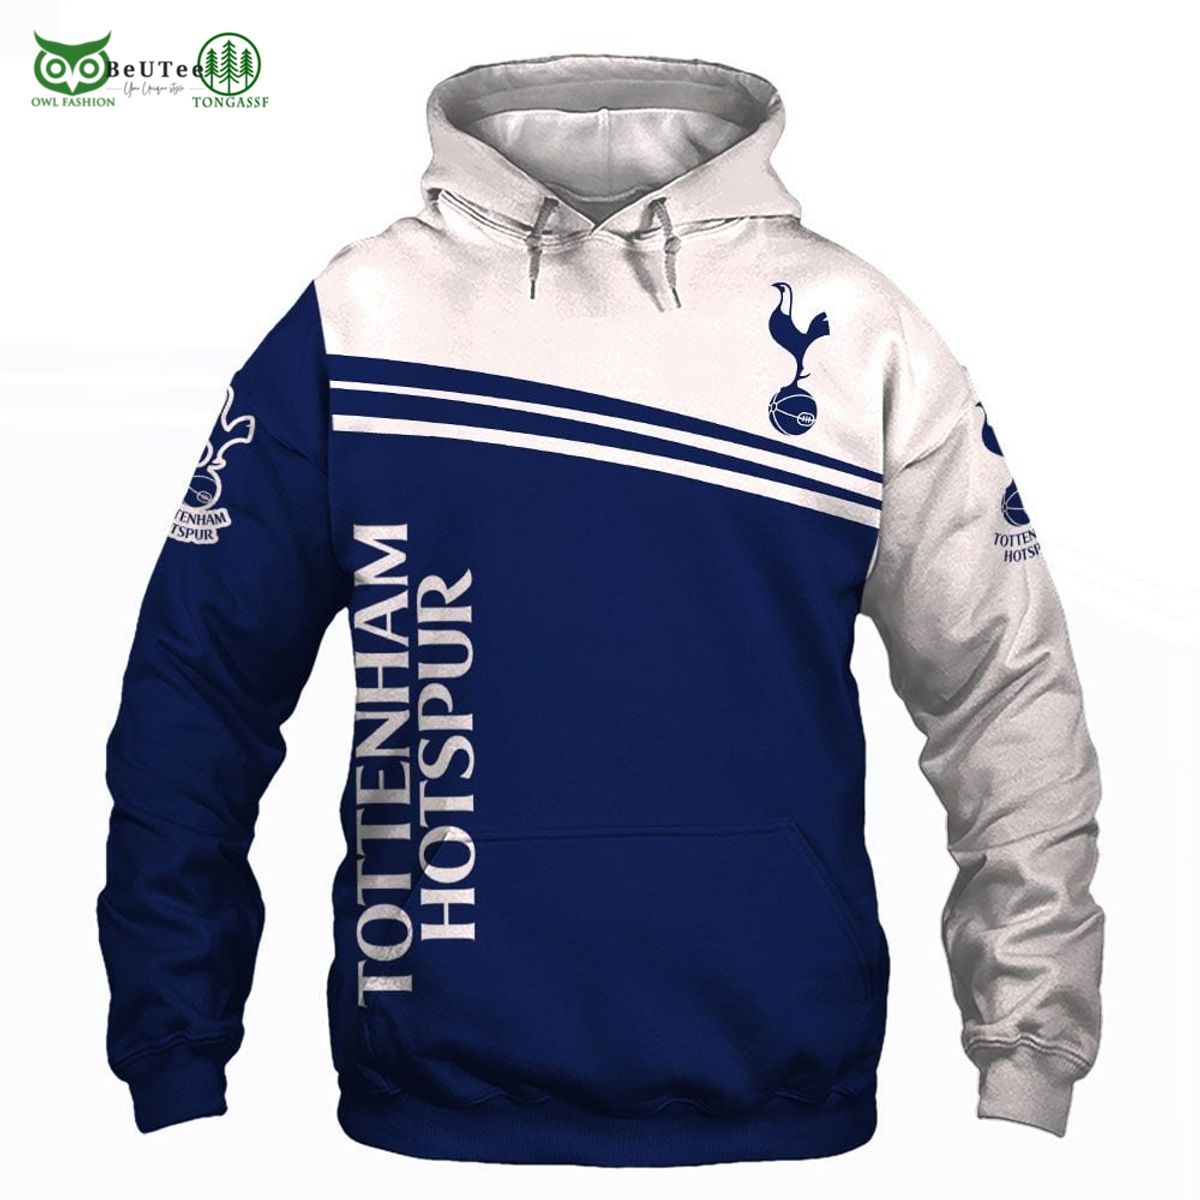 tottenham hotspur premier league 3d printed hoodie sweatshirt sweater 1 LNLUE